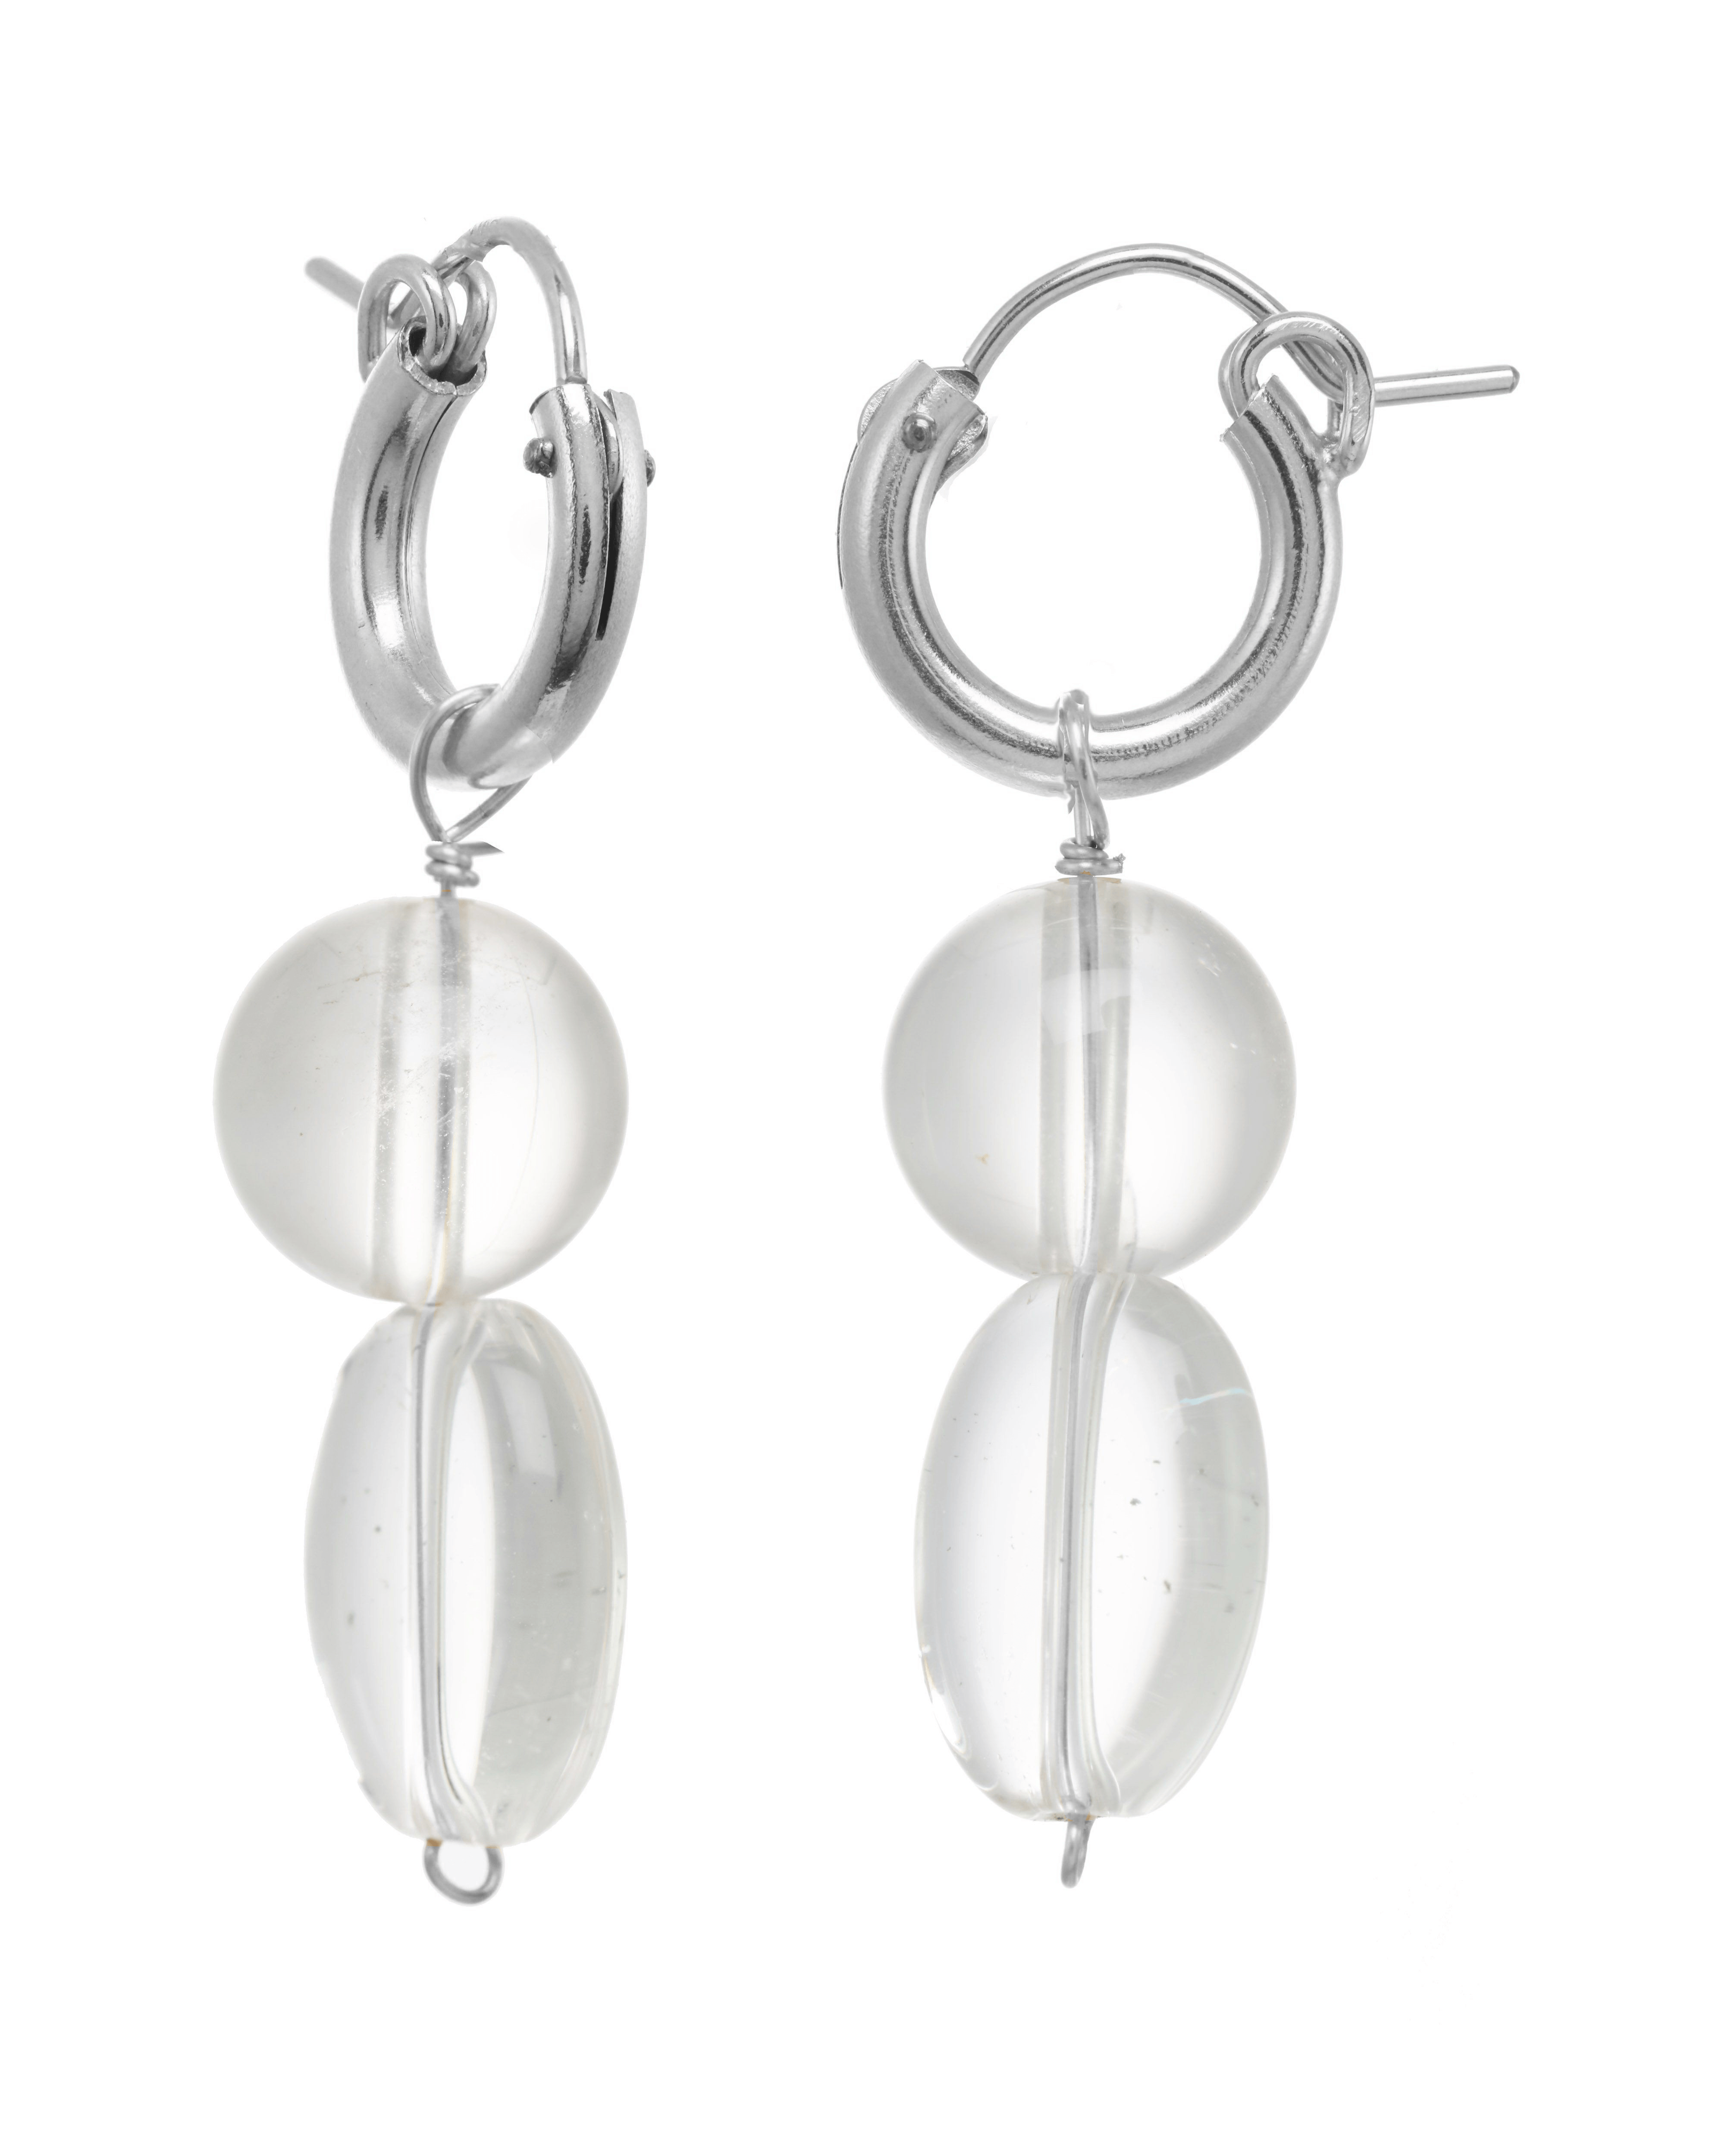 Lai Hoops Earrings by KOZAKH. 12mm snap closure hoop earrings, crafted in Sterling Silver, featuring Crystal Quartz.